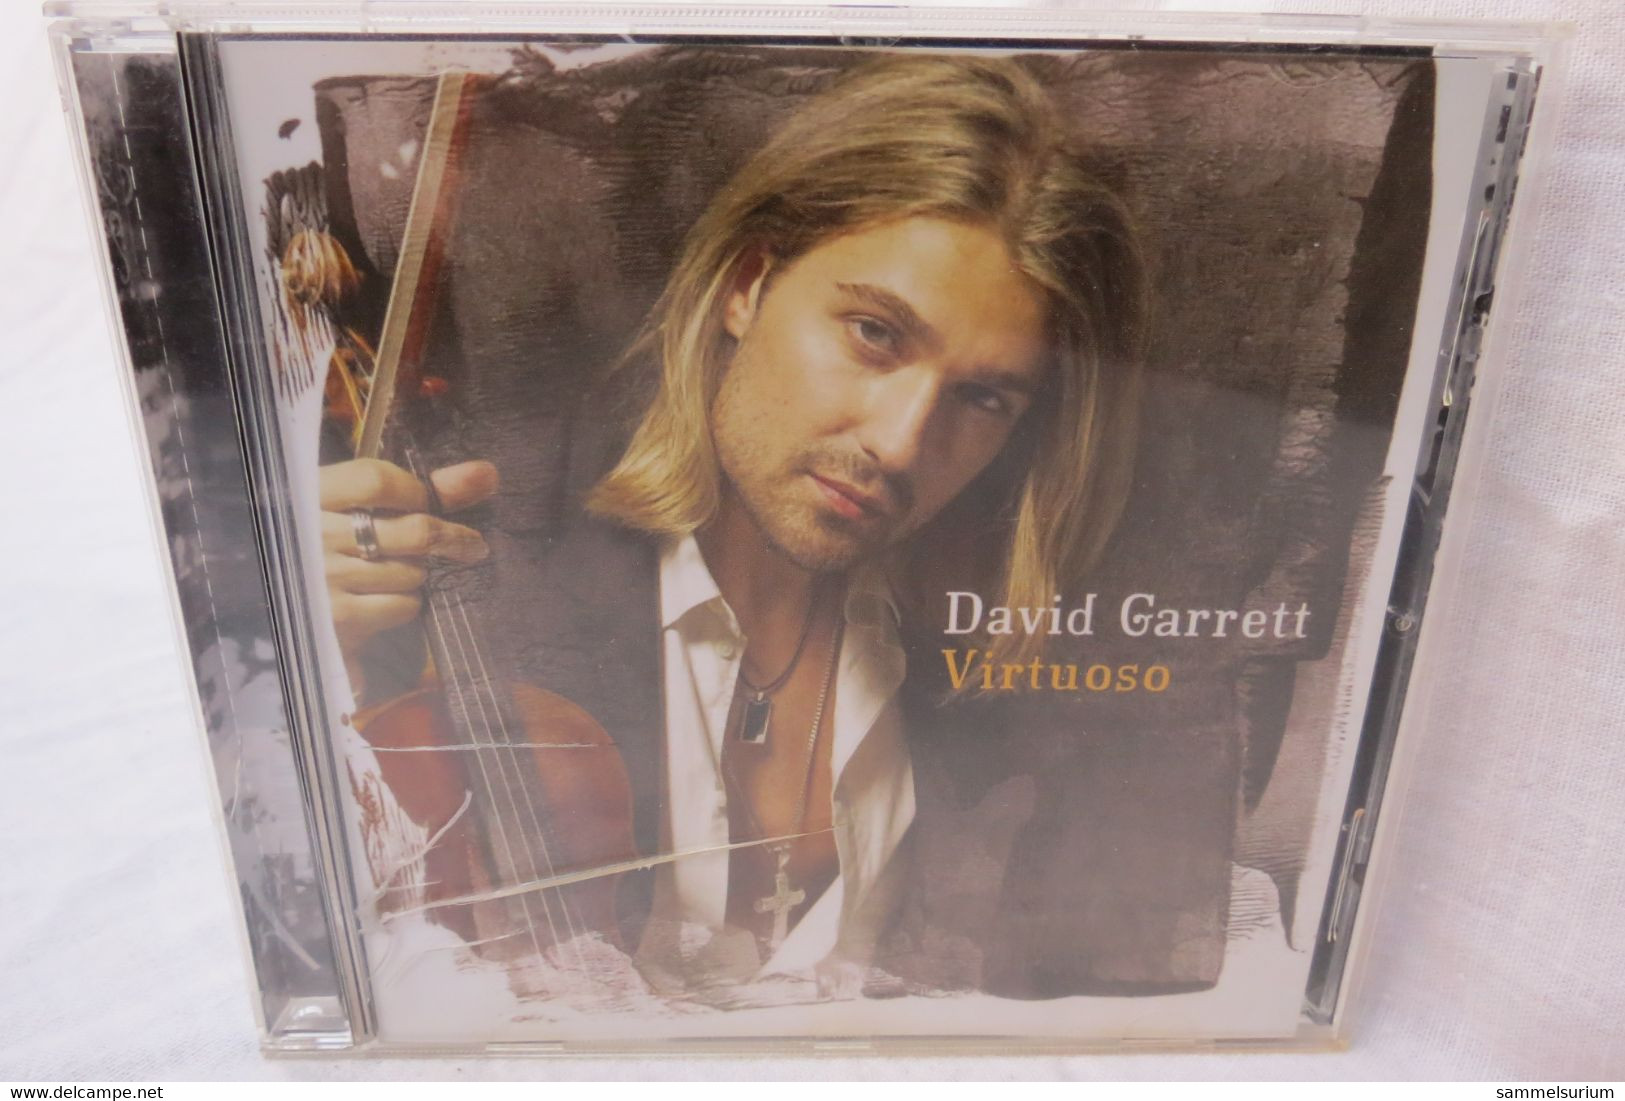 CD "David Garrett" Virtuoso - Strumentali